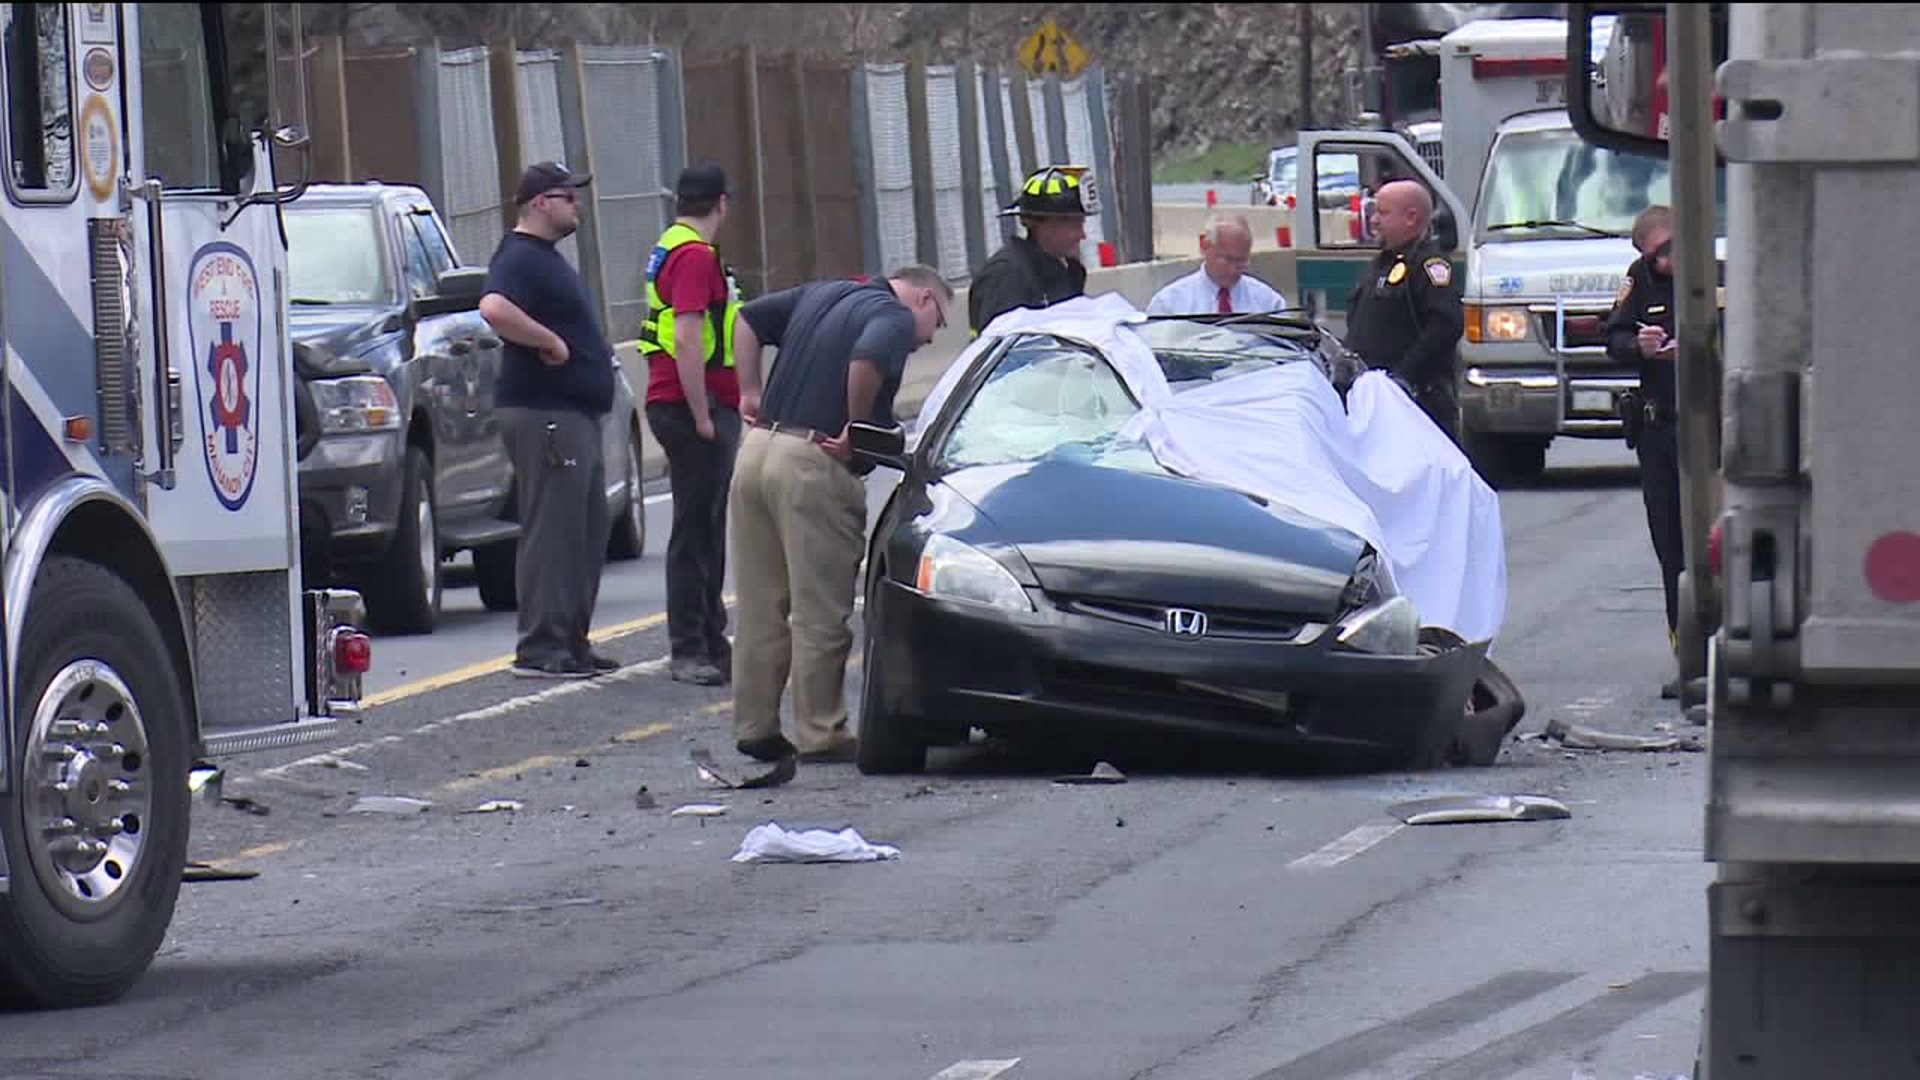 One Person Dies in Schuylkill County Crash